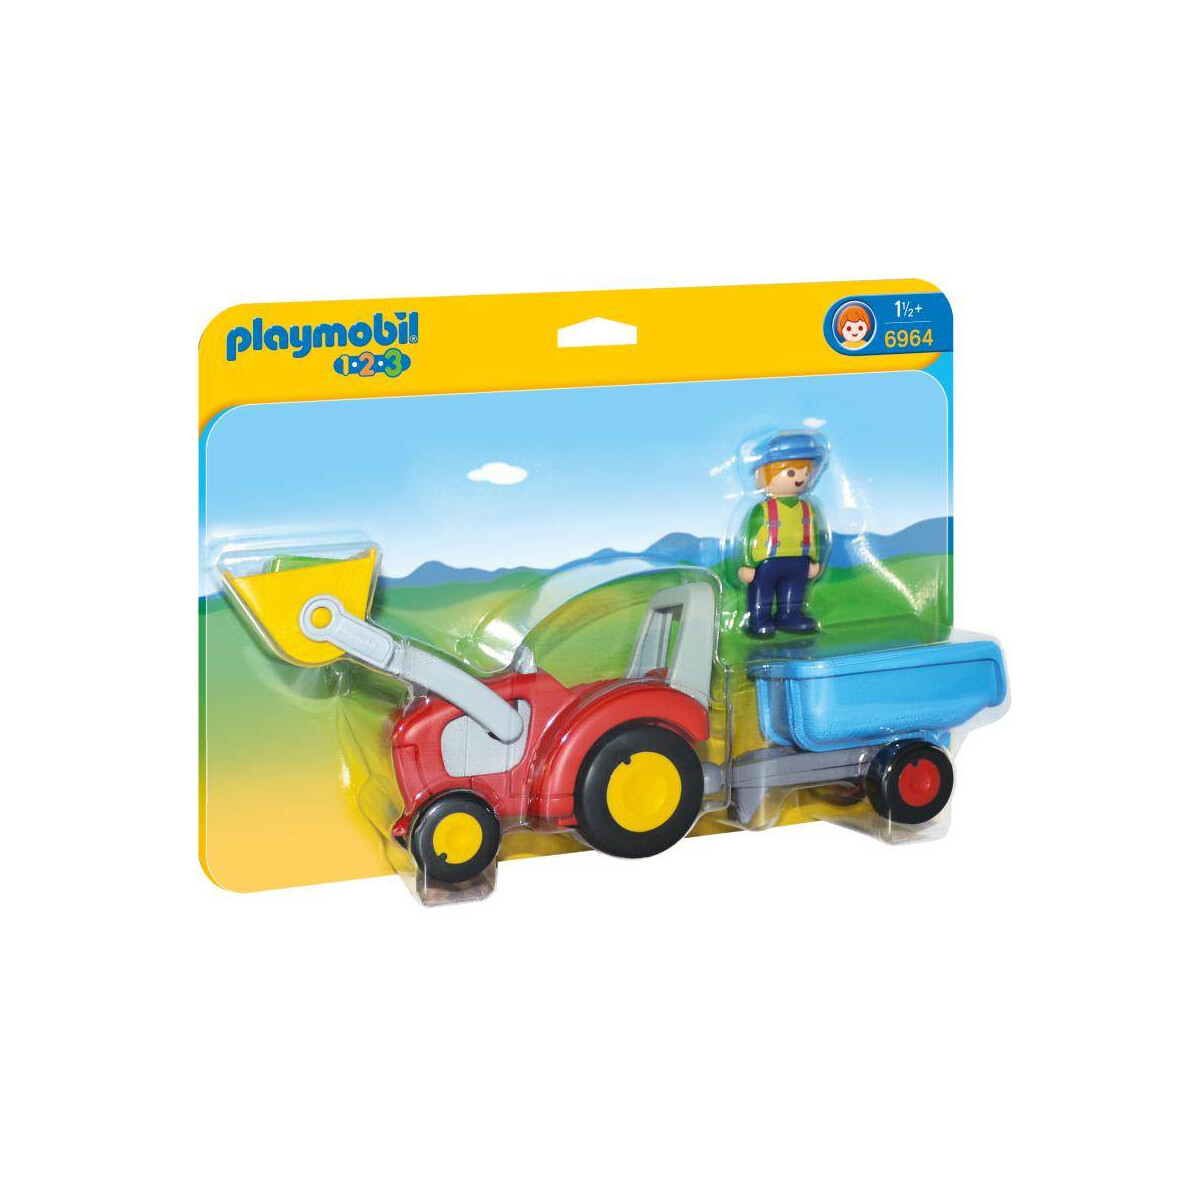 HALTER Reifen 38x18/1 Anhänger Bauernhof Traktor 4494 7891 5005 Playmobil® RAD 